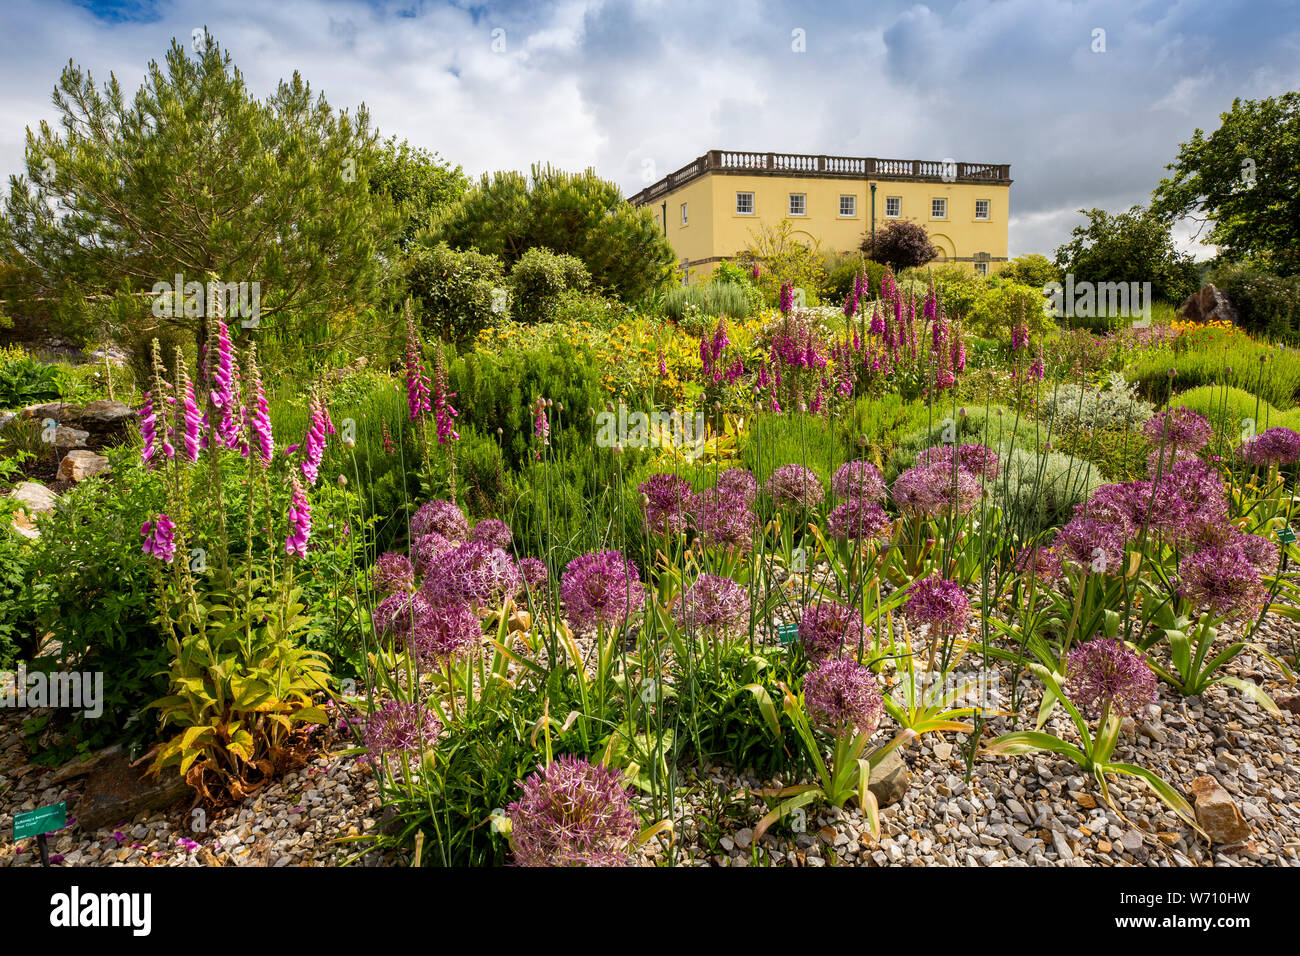 UK, Wales, Carmarthenshire, Llanarthney, National Botanic Garden of Wales, Principlity House, Regency property and floral planting Stock Photo